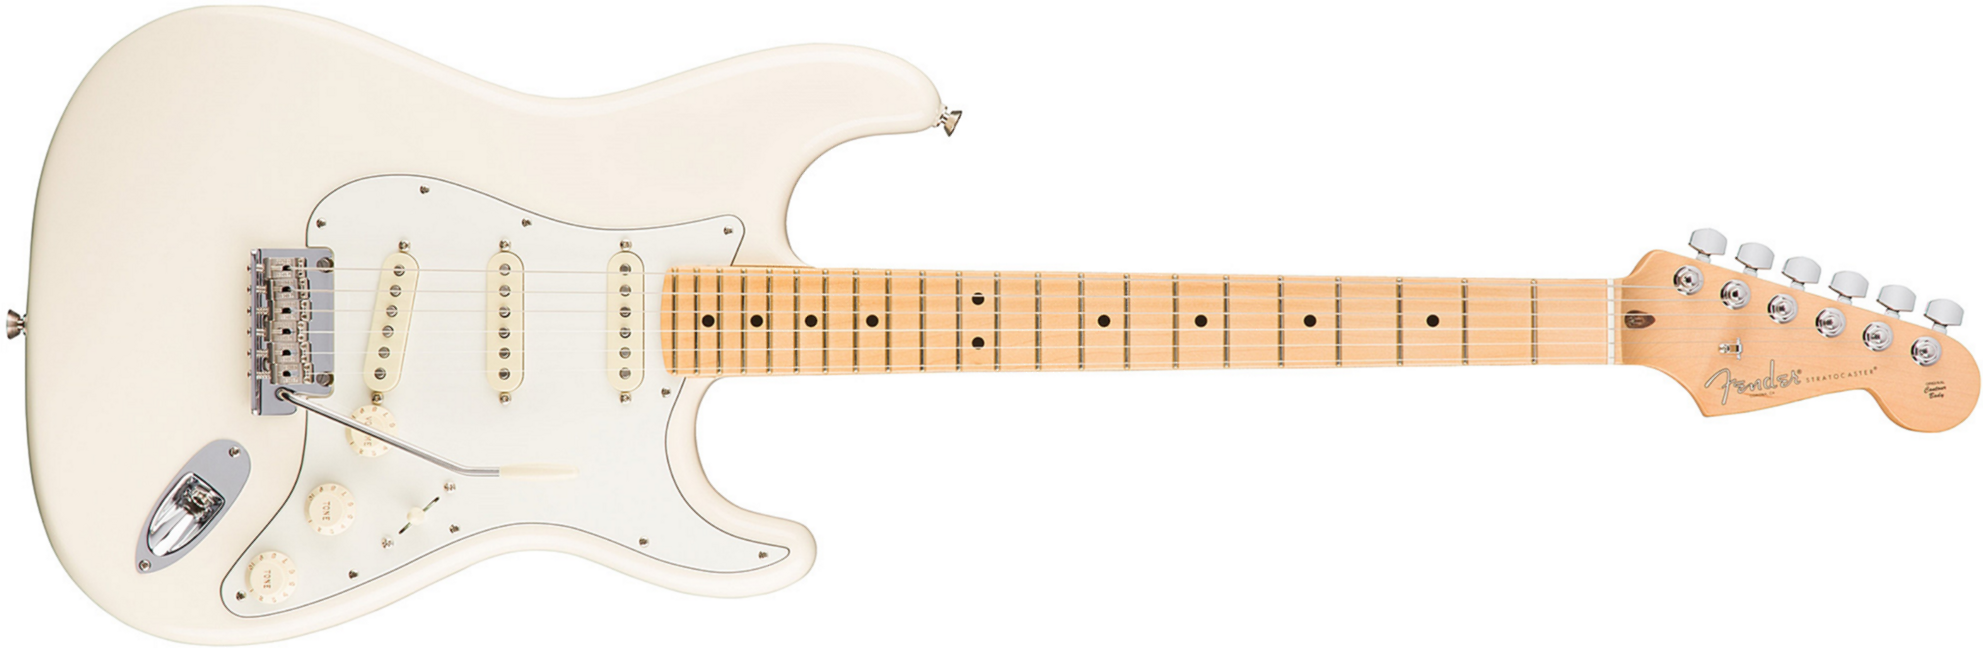 Fender Strat American Professional 2017 3s Usa Mn - Olympic White - Guitarra eléctrica con forma de str. - Main picture